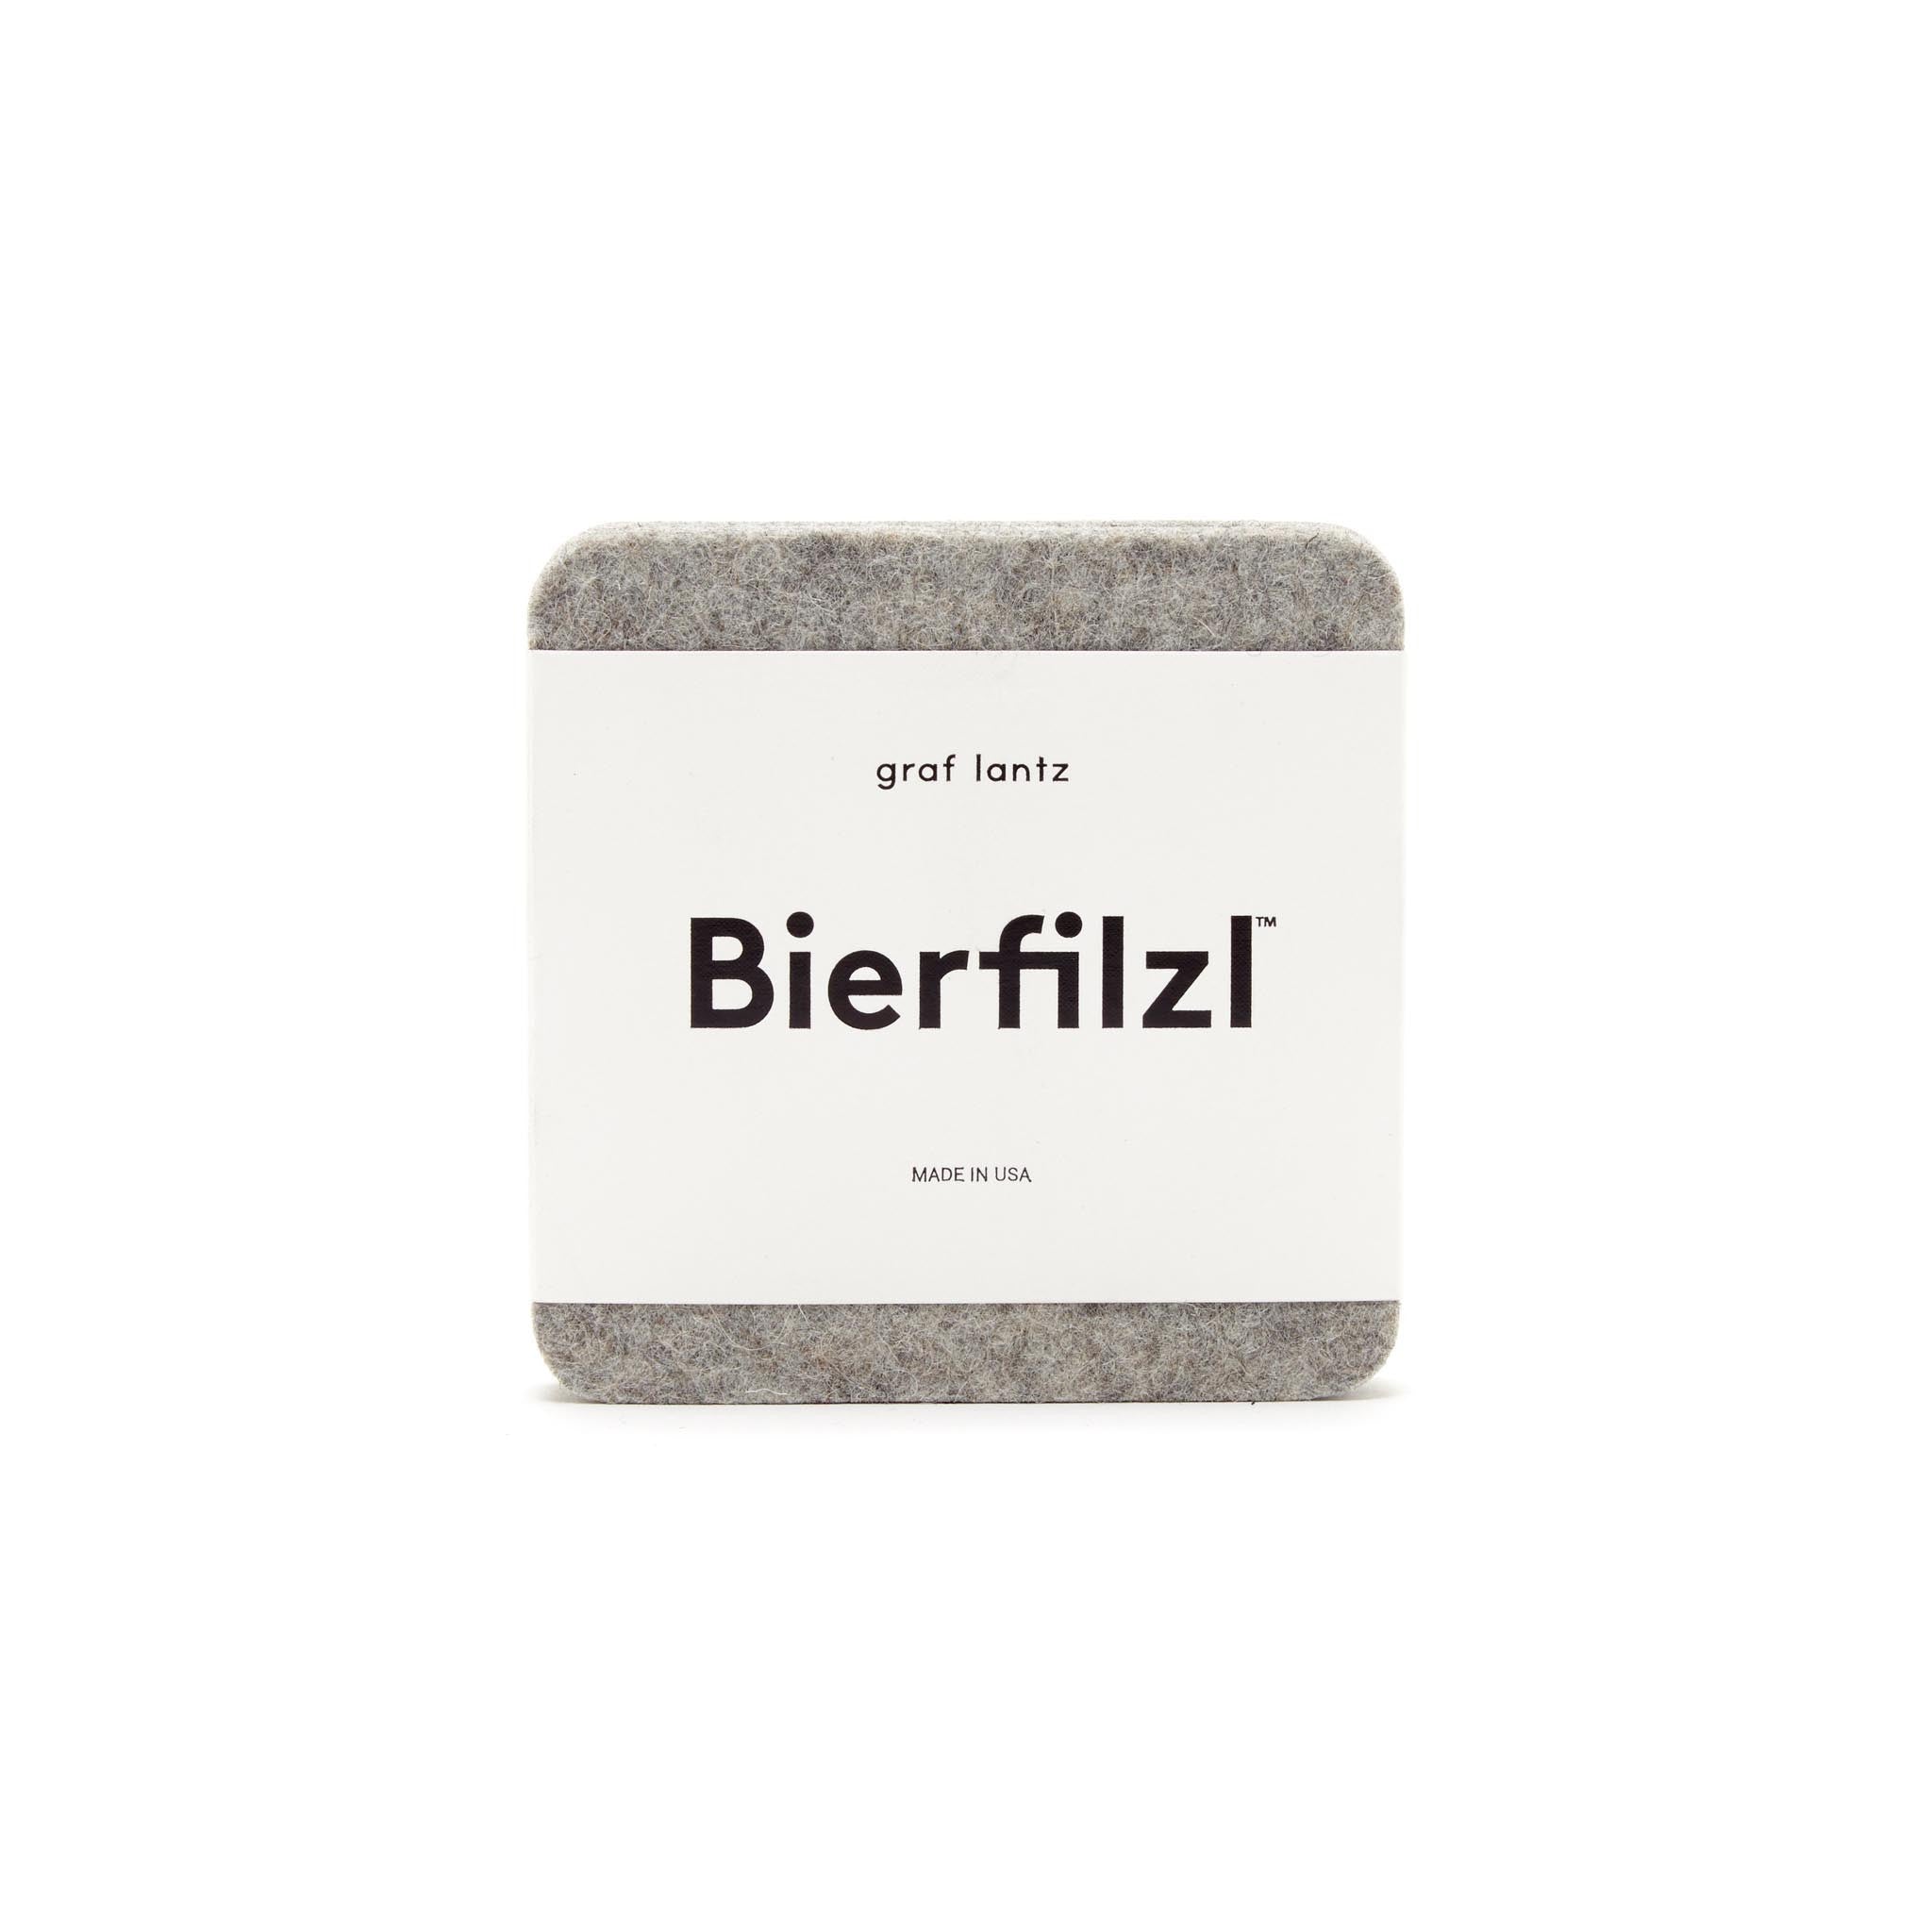 Bierfilzl Wool Felt Coaster Set of 4 - Granite